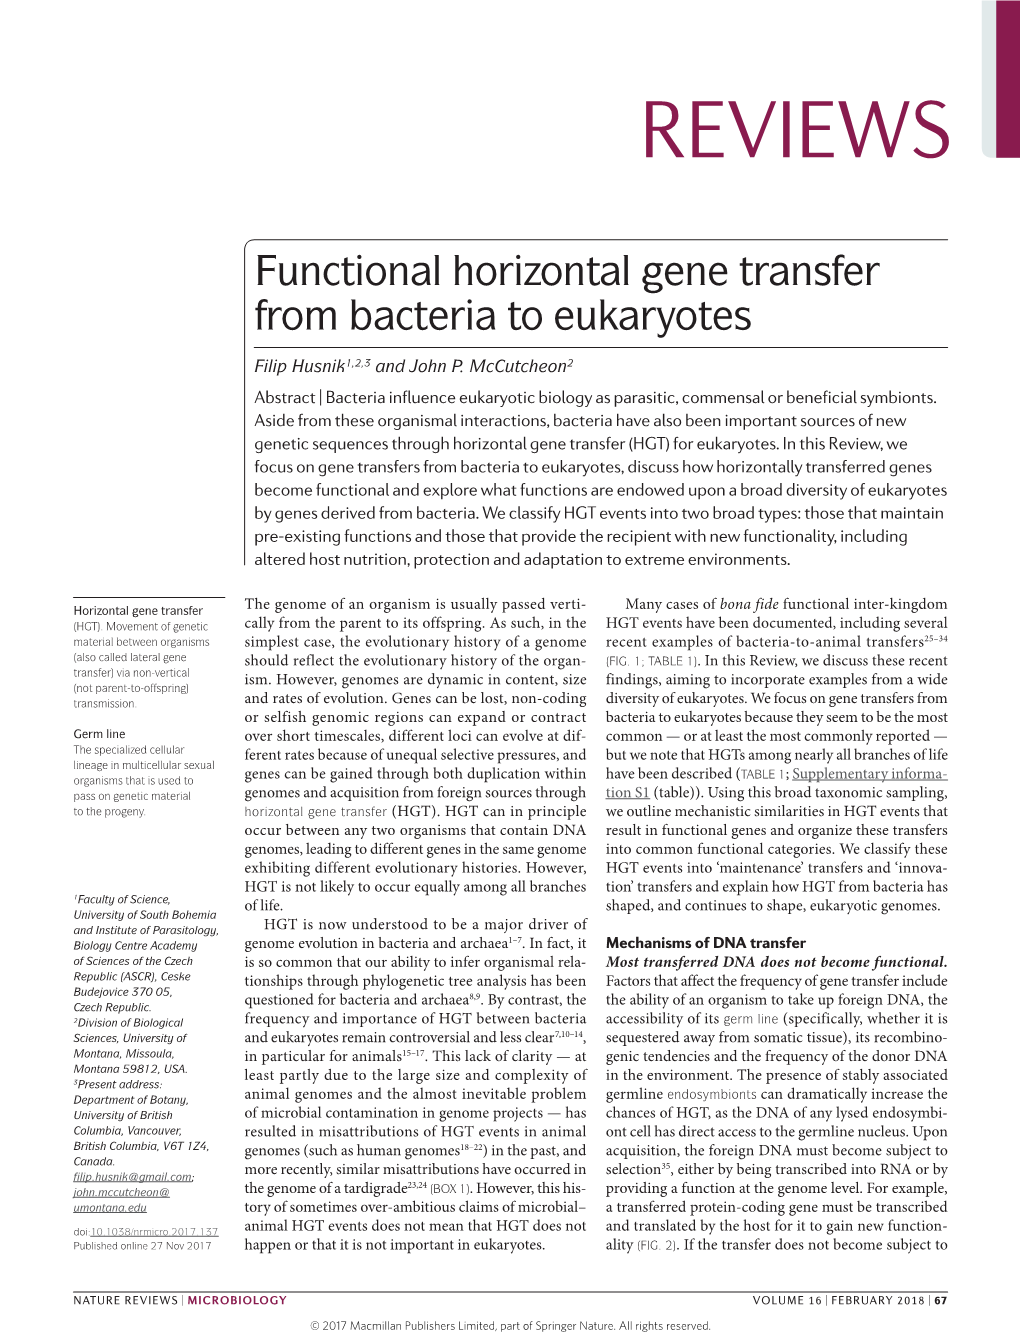 Functional Horizontal Gene Transfer from Bacteria to Eukaryotes